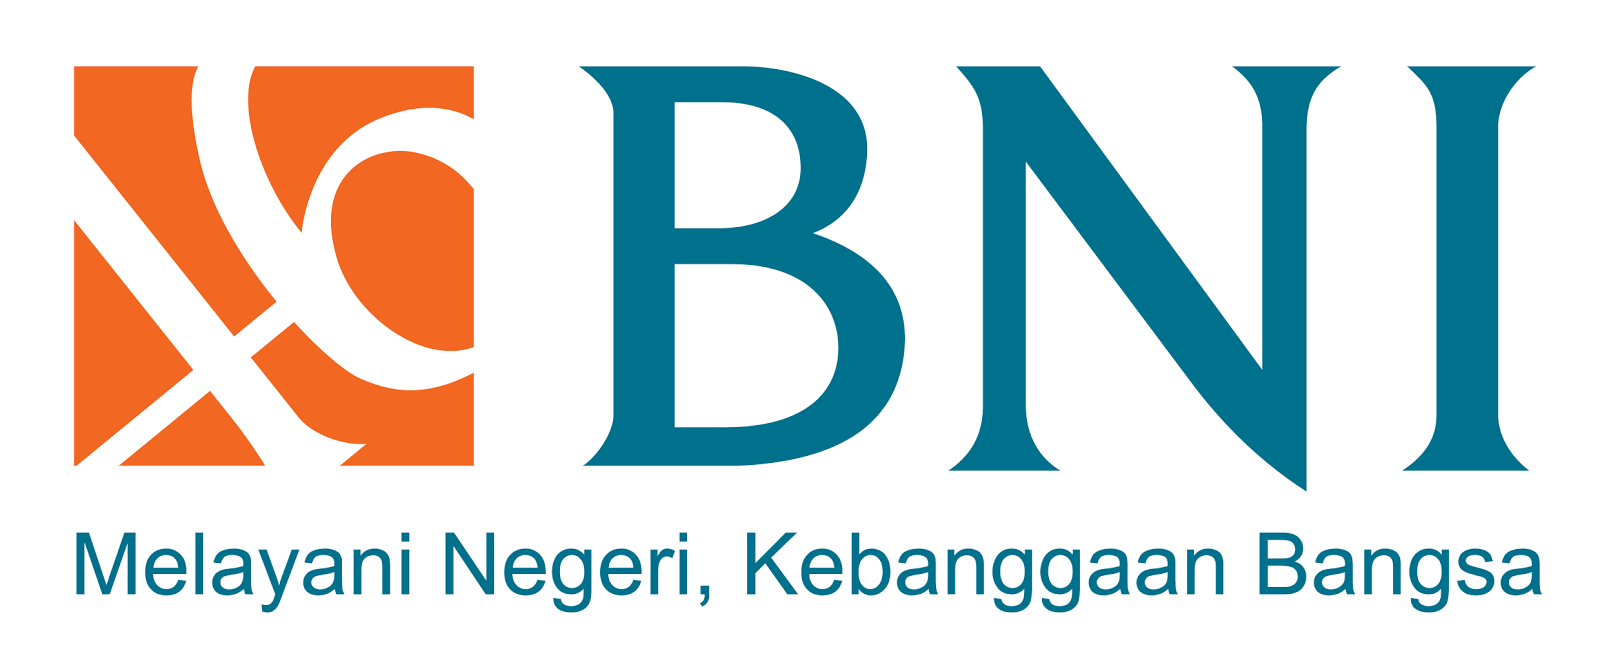 kisspng-bank-negara-indonesia-logo-bank-bni-syariah-pt-sym-republik-logo-bank-5b7964f47f6cd5.984586111534682356522